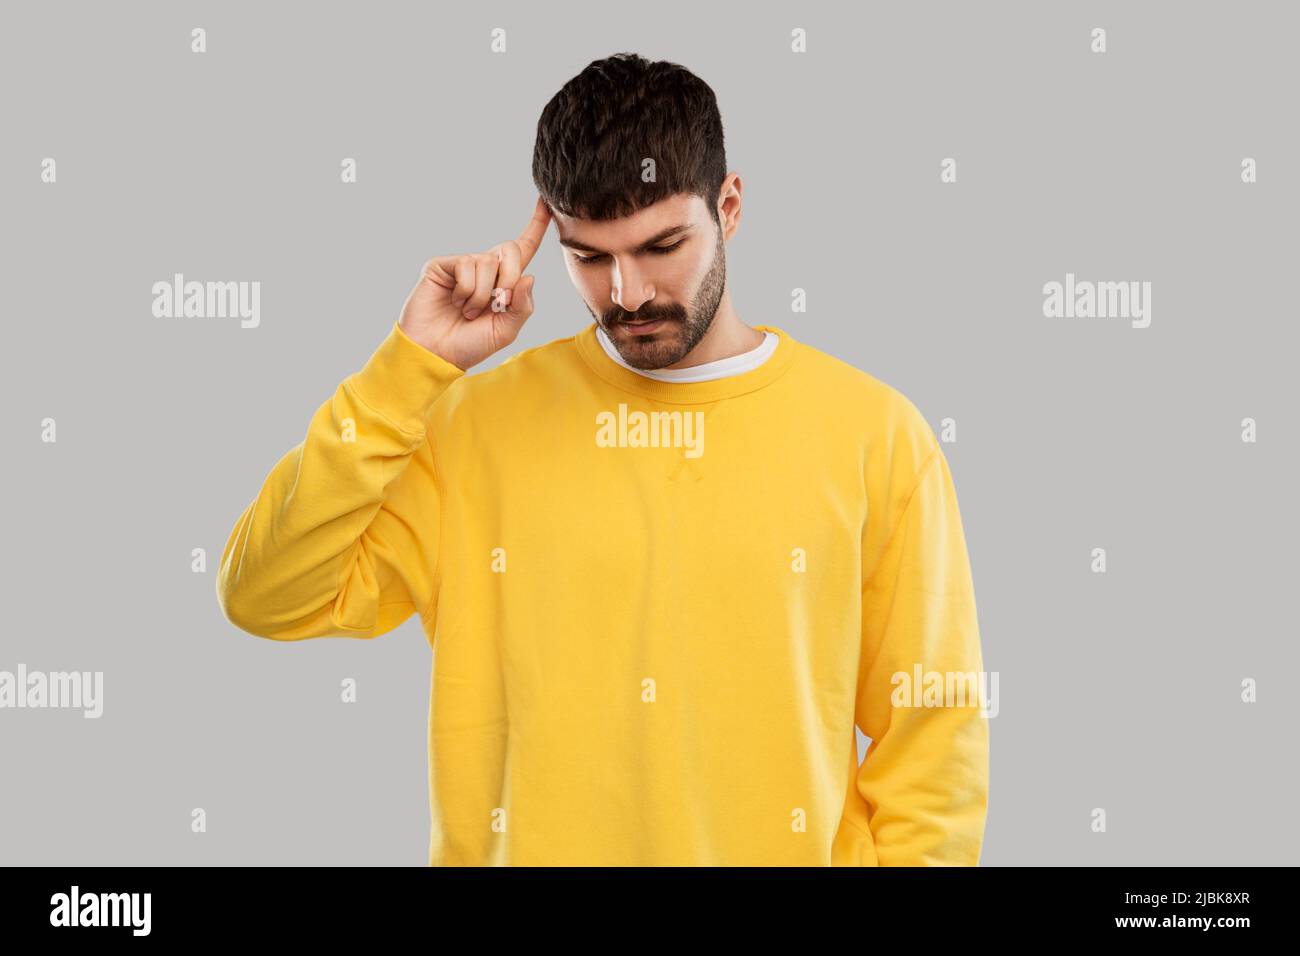 thinking young man in yellow sweatshirt Stock Photo